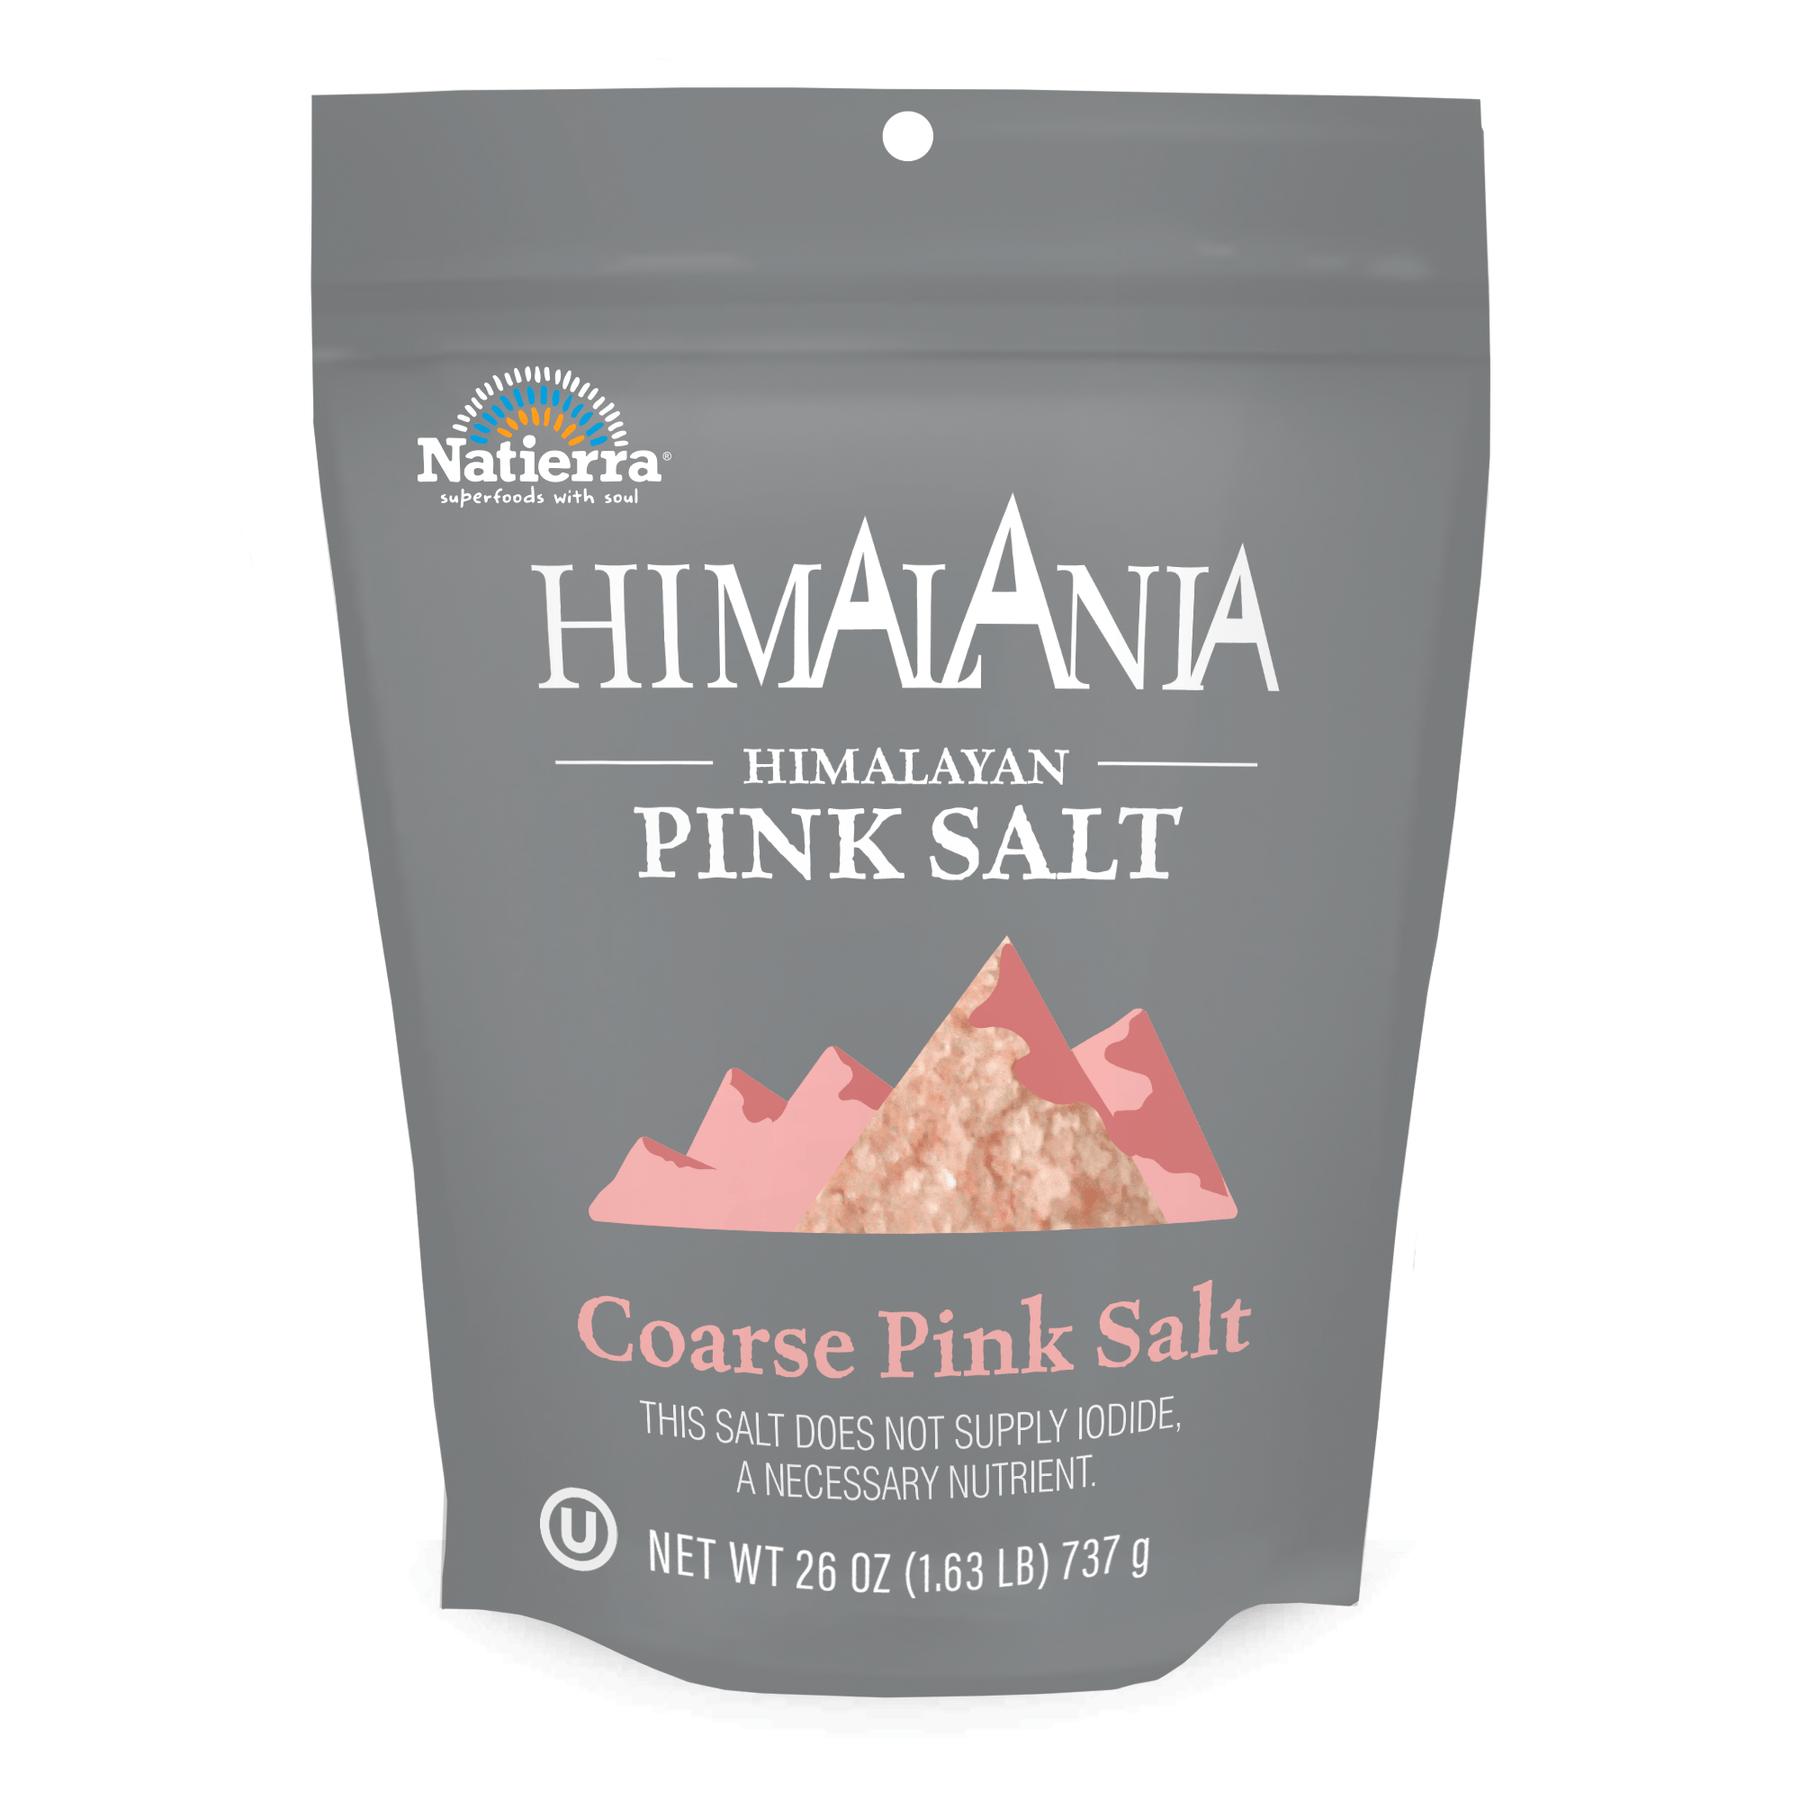 Natierra Himalania Coarse Pink Salt 26 oz pouch